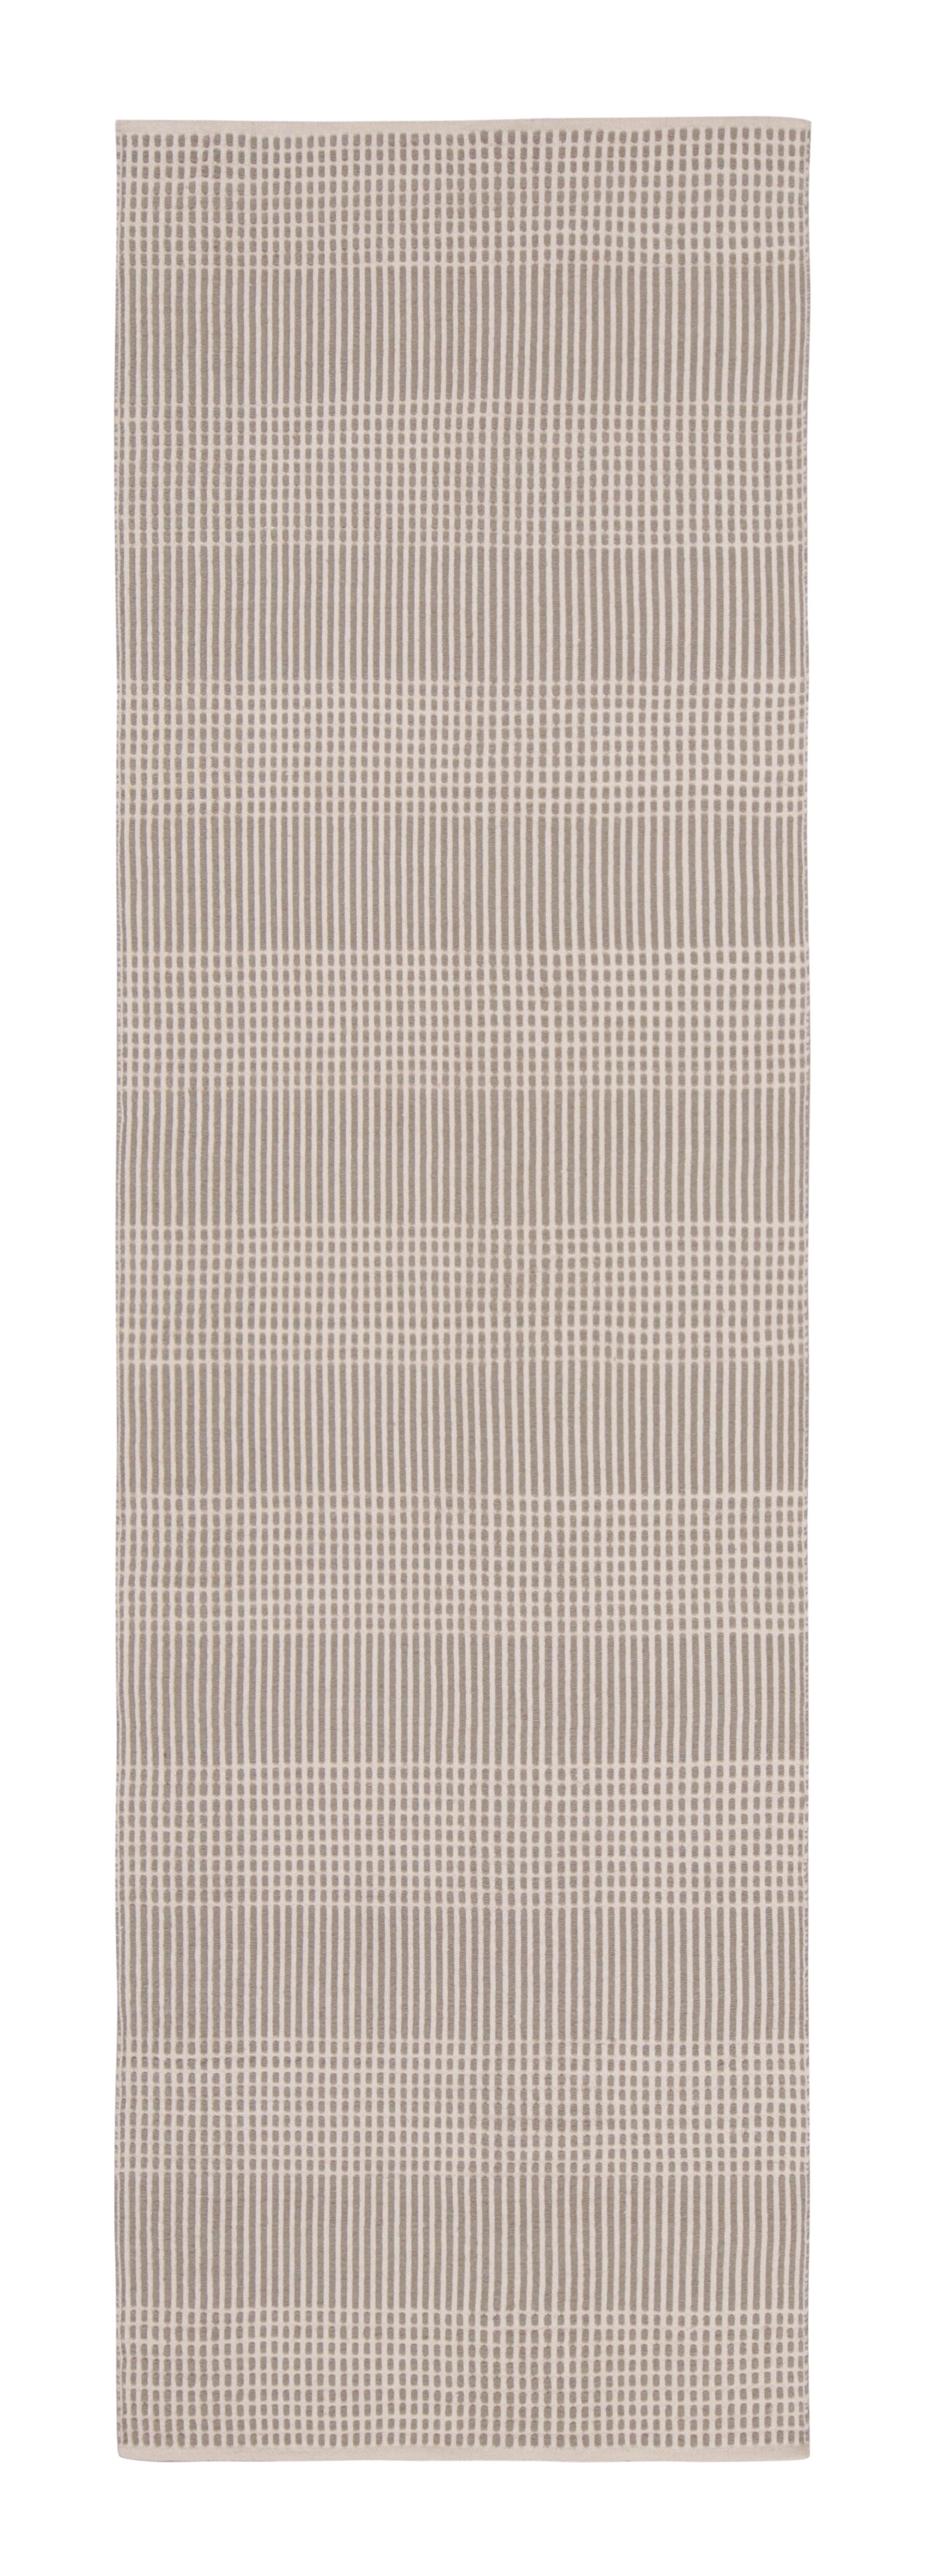 Rug & Kilim's Modern Flat-Weave Beige Brown Geometric Striped Pattern